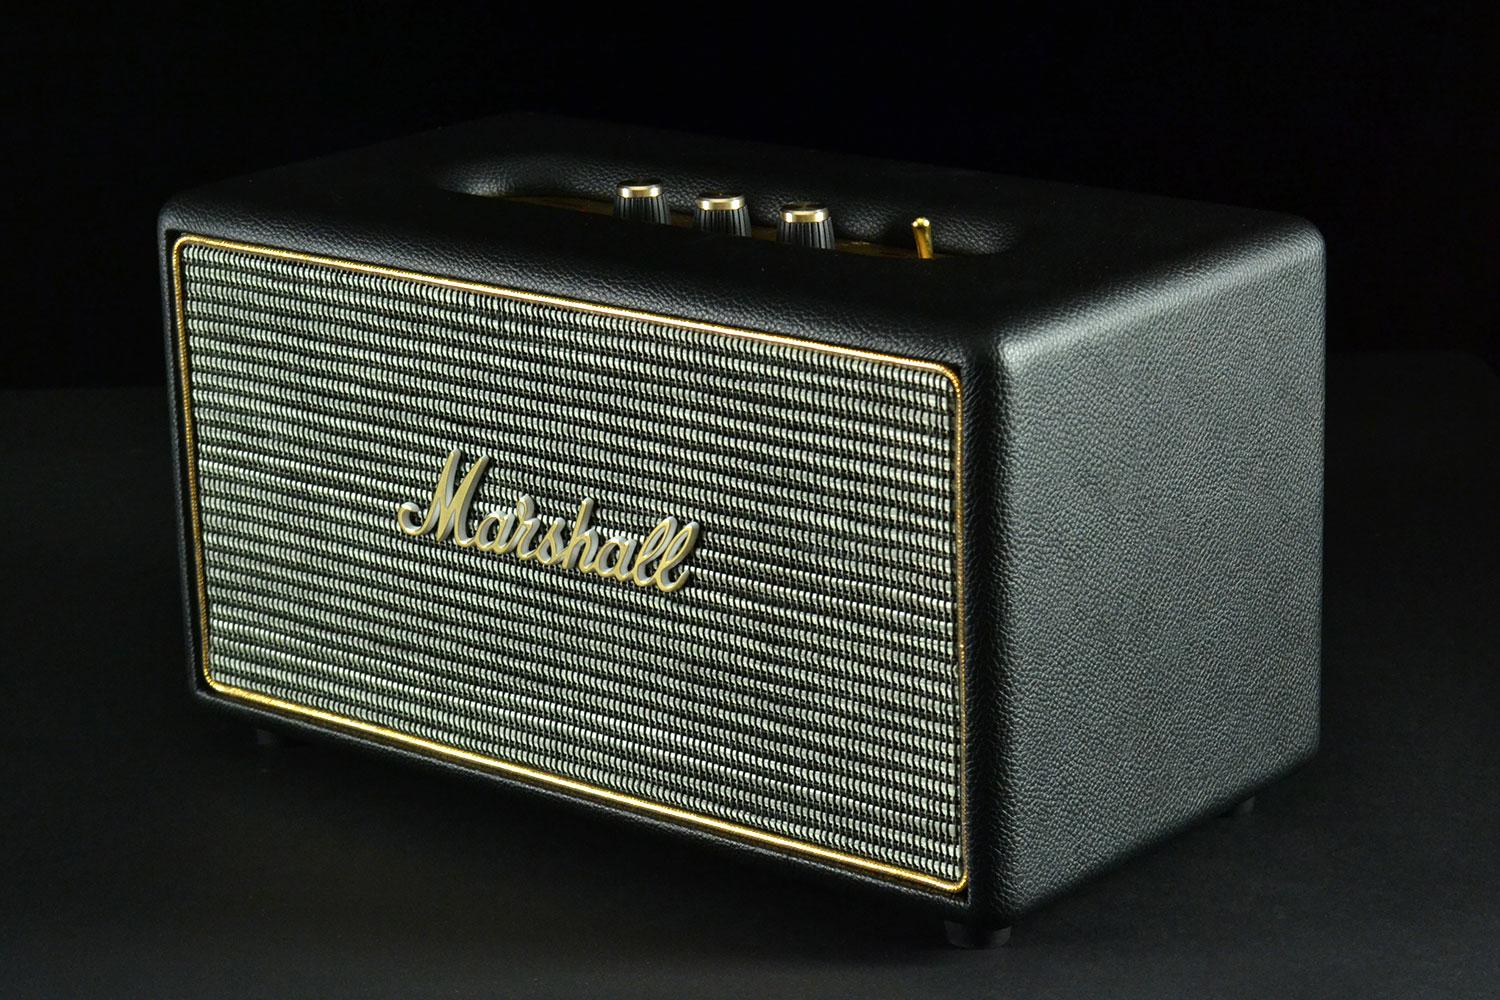 Buy Marshall Stanmore II Bluetooth Speaker